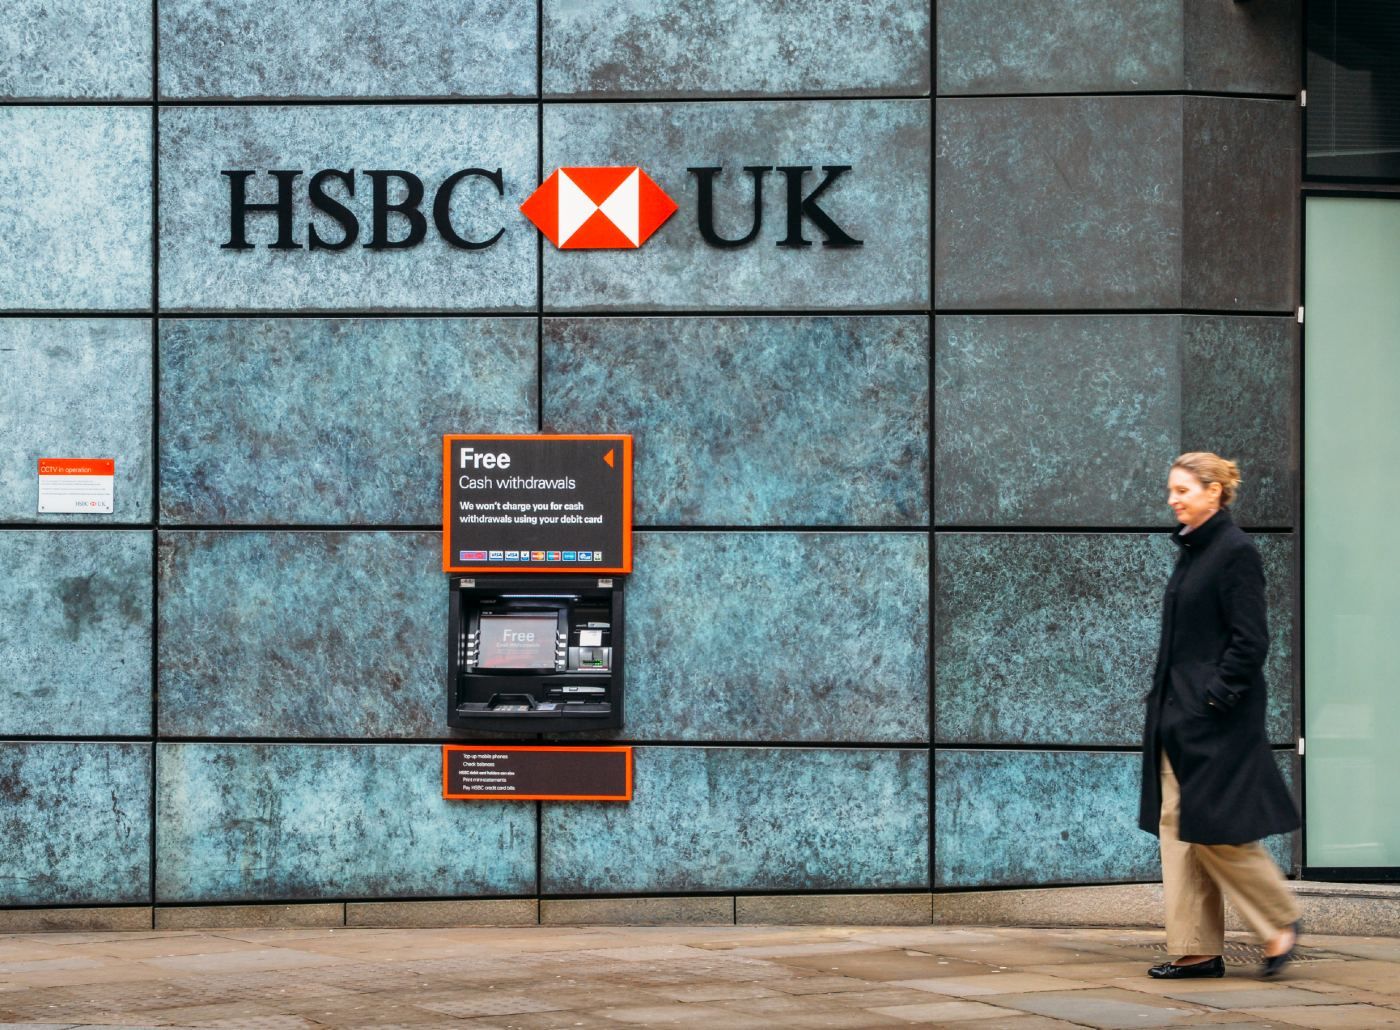 A woman walks by an HSBC UK bank cash machine in a wall - HSBC text scam